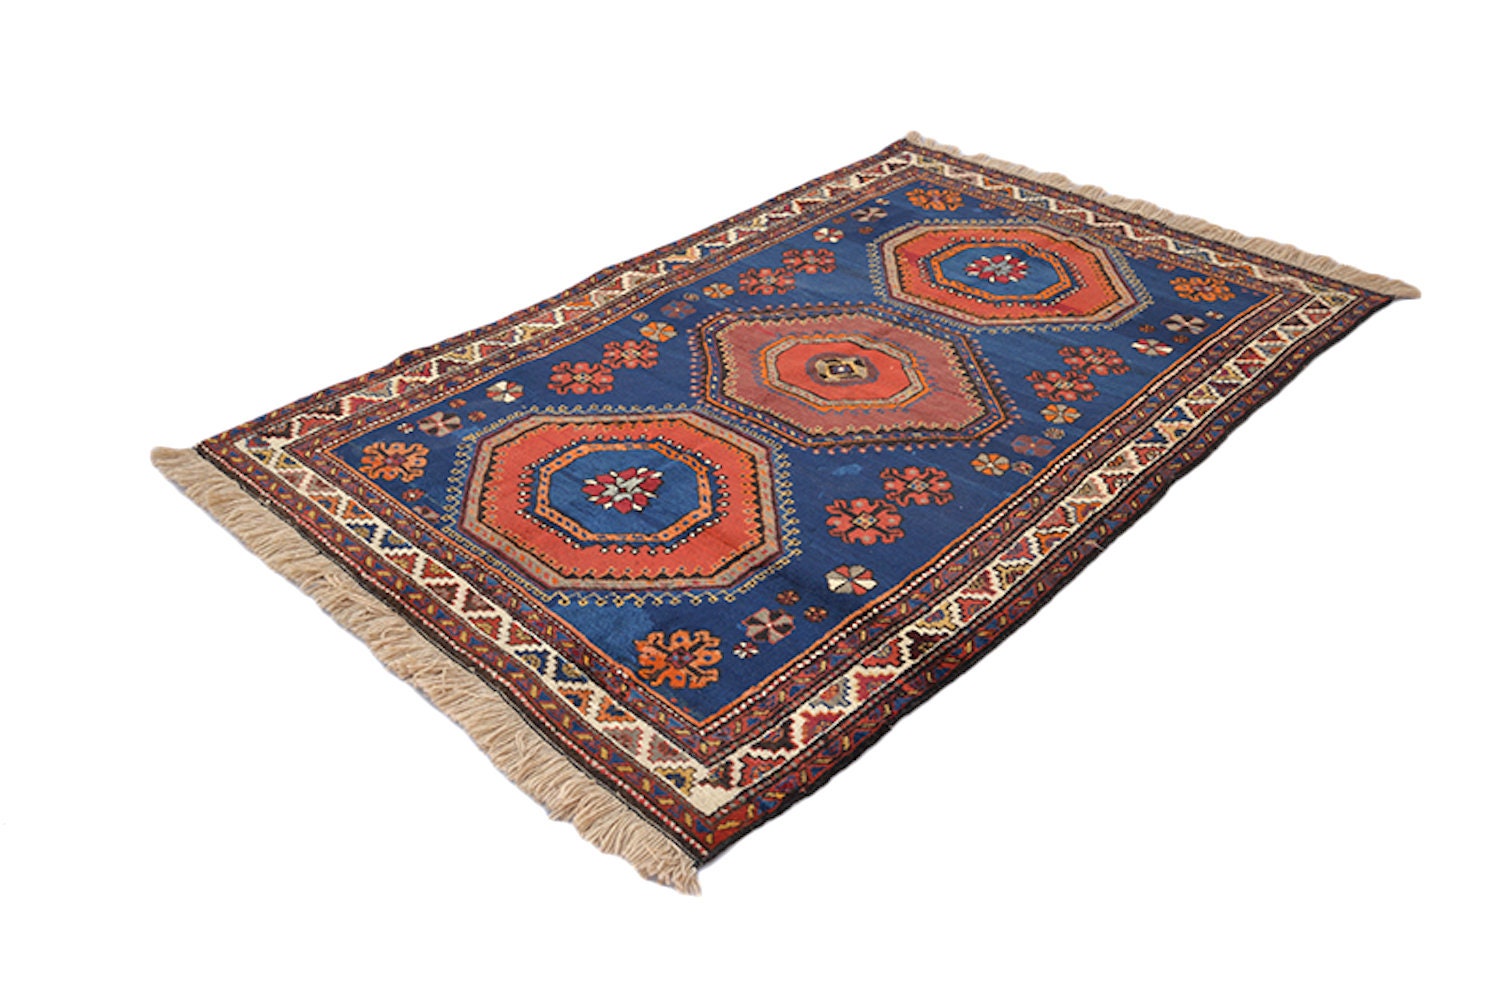 Bright Orange Blue Tribal Rug | Boho Eclectic Rug | 4 x 6 Feet | Kazak Antique Handmade Carpet | Vibrant Colorful